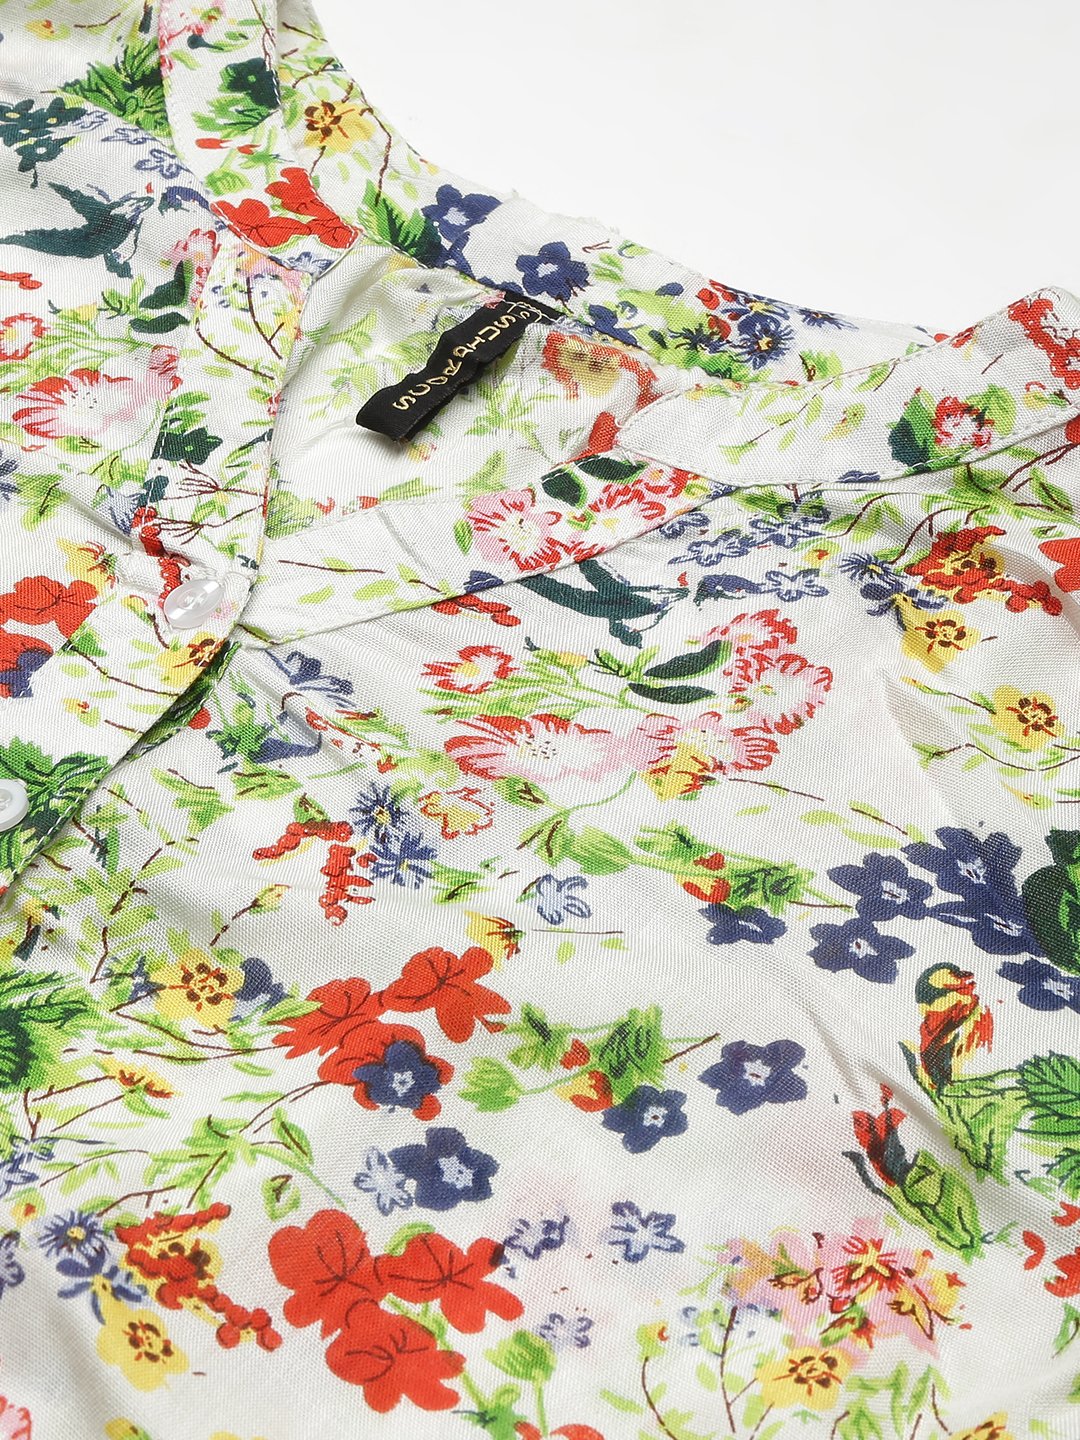 Scorpius Multicolor Floral Rayon Shirt